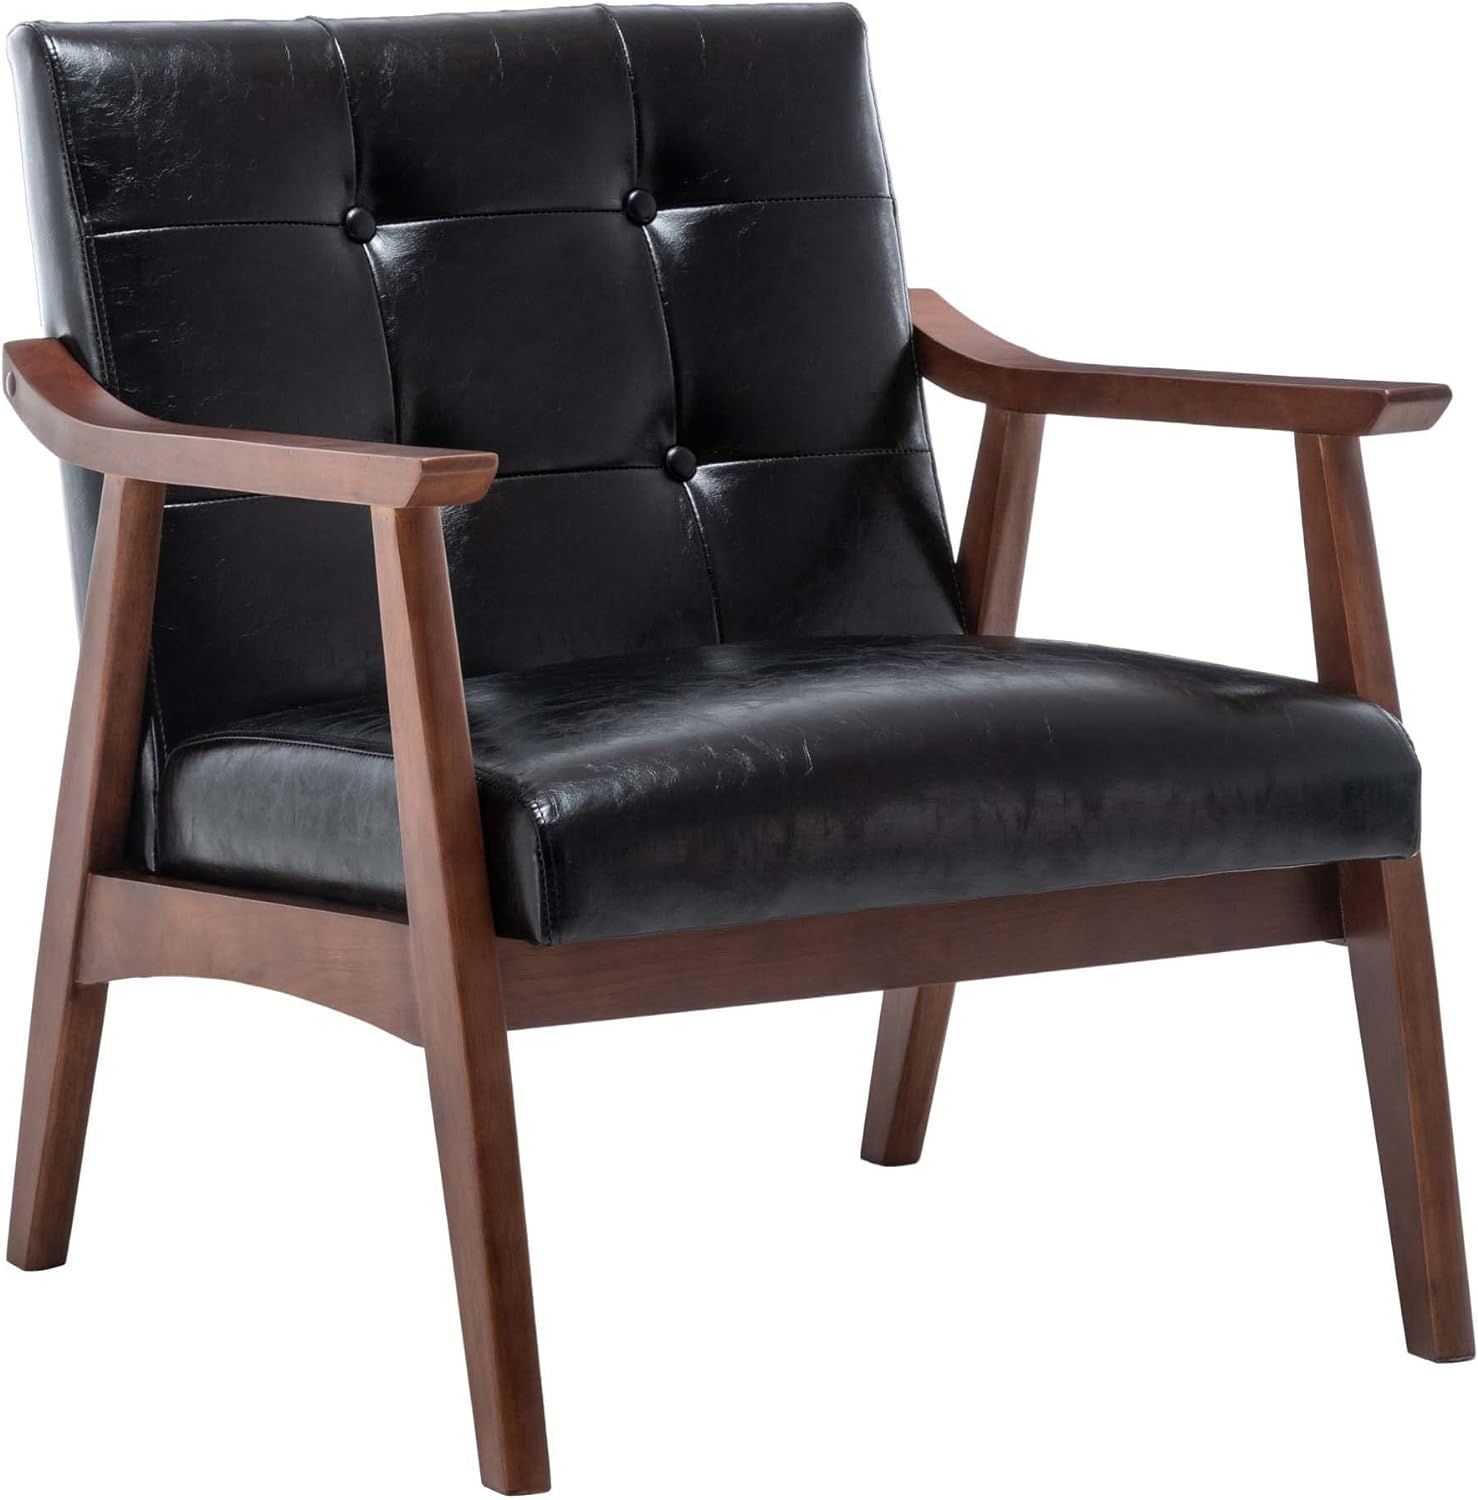 Convenience Concepts Take a Seat Natalie Accent Chair, Black Faux Leather/Espresso | Amazon (US)